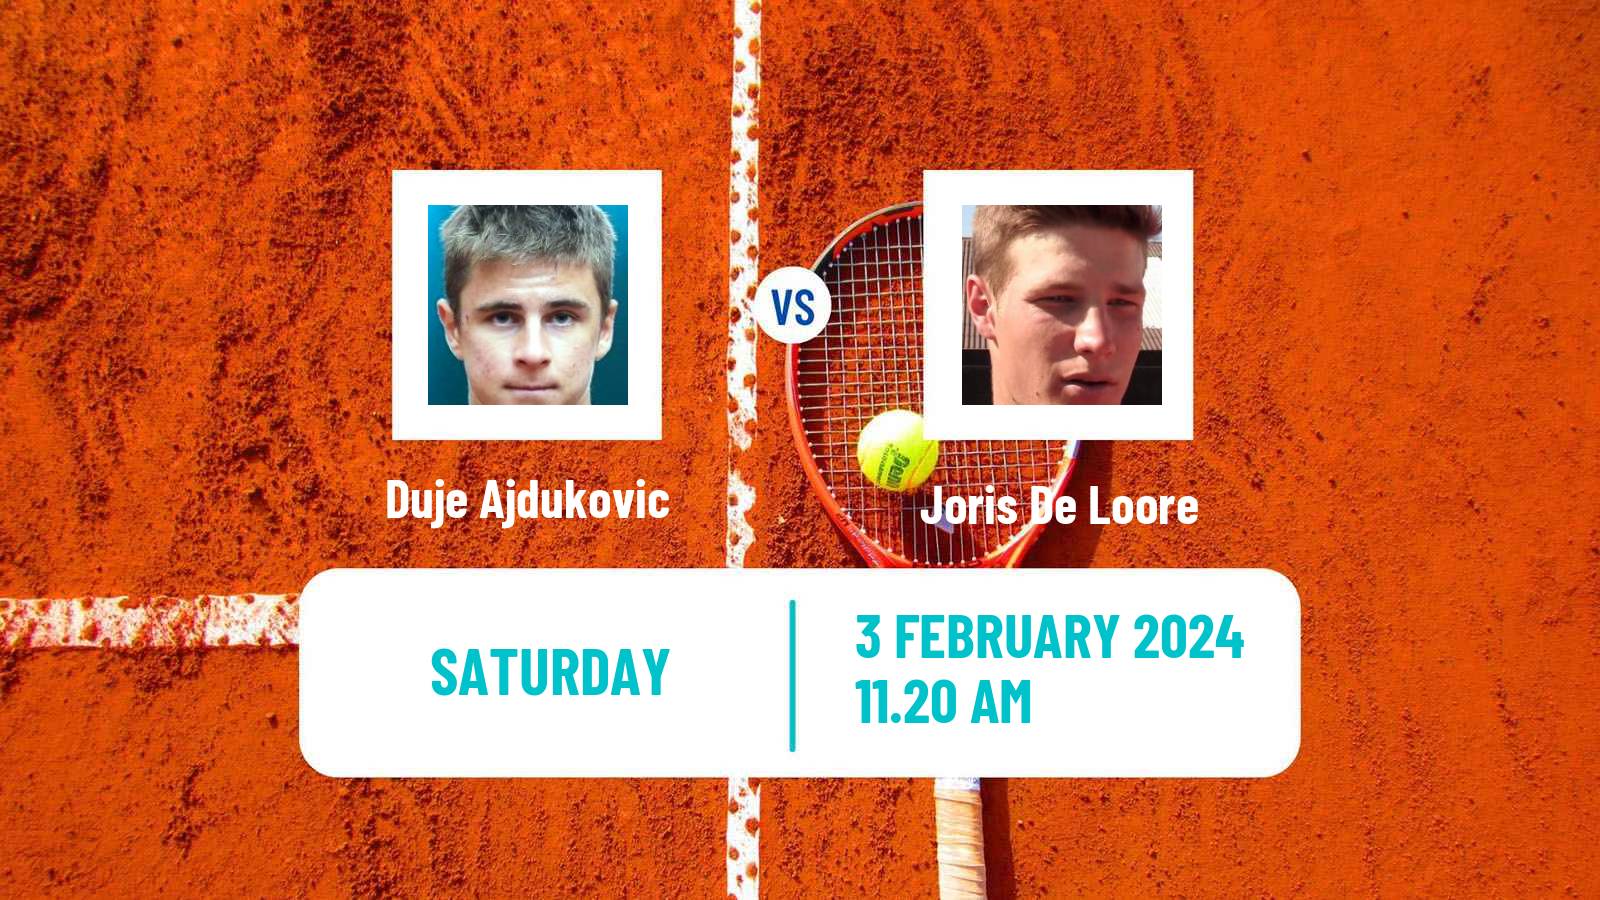 Tennis Davis Cup World Group Duje Ajdukovic - Joris De Loore